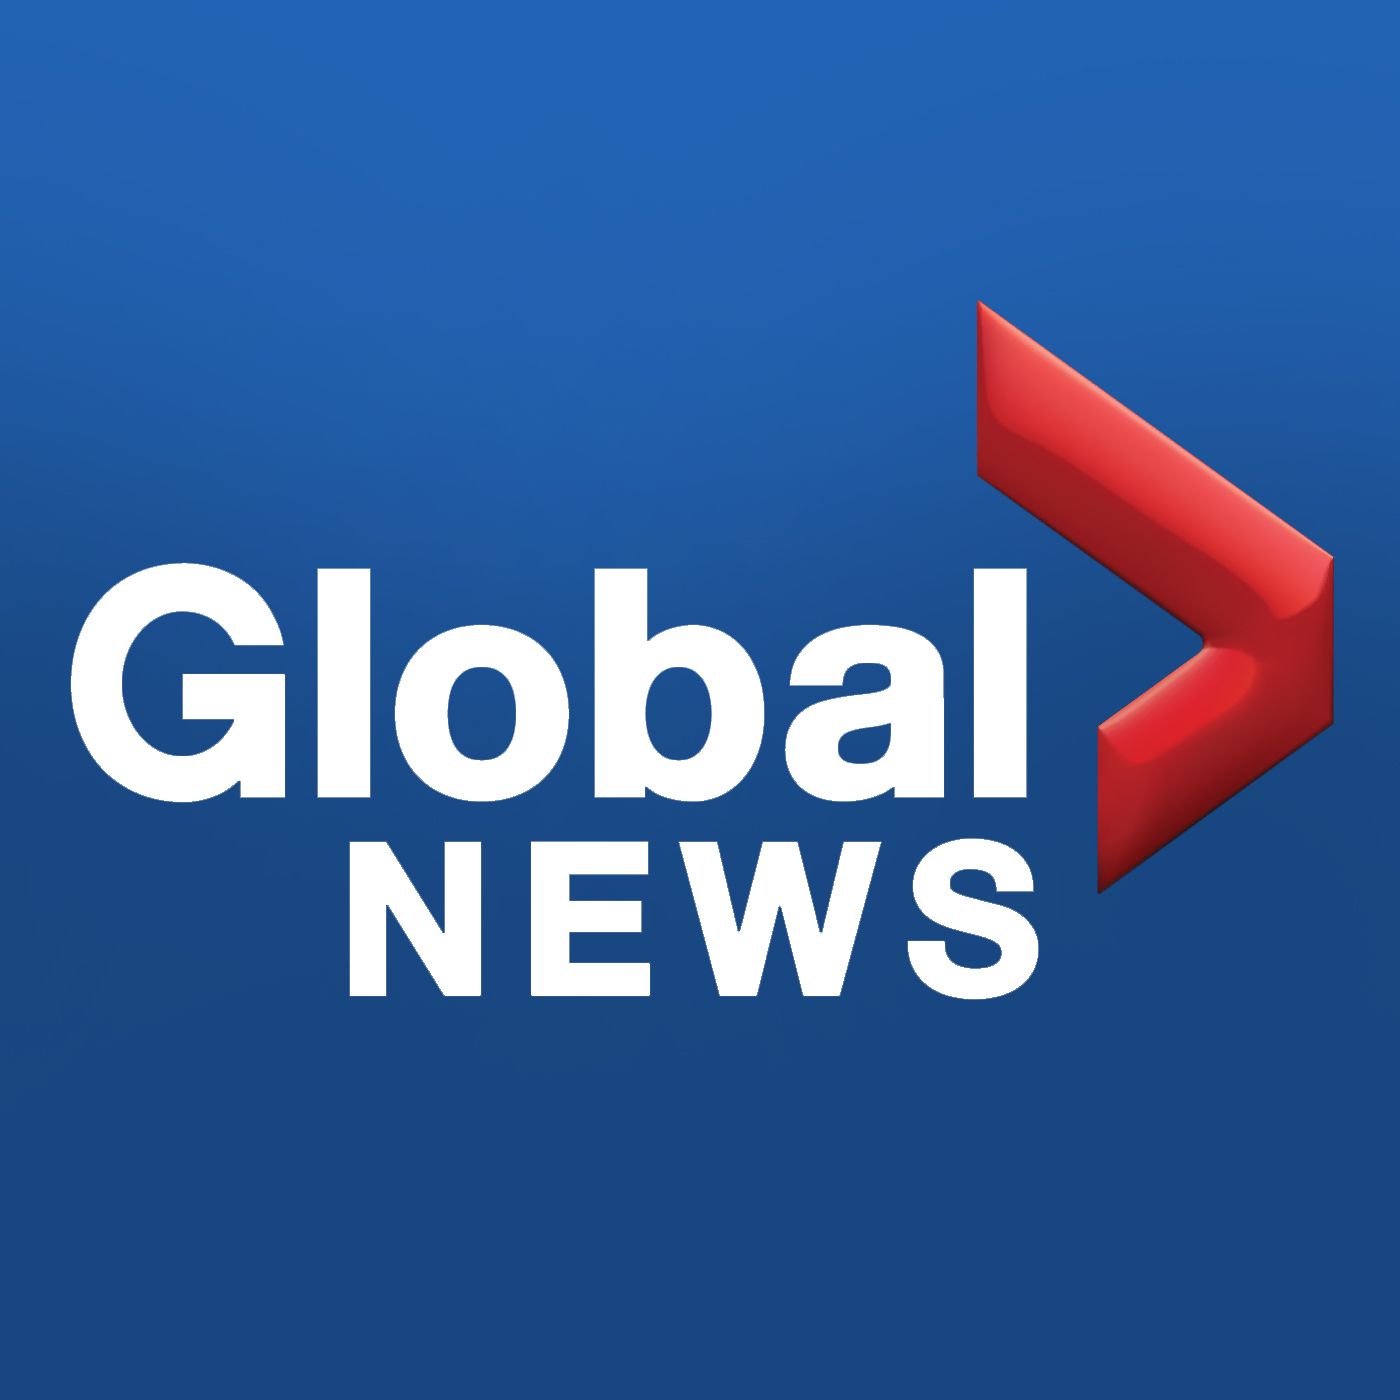 Global News square logo